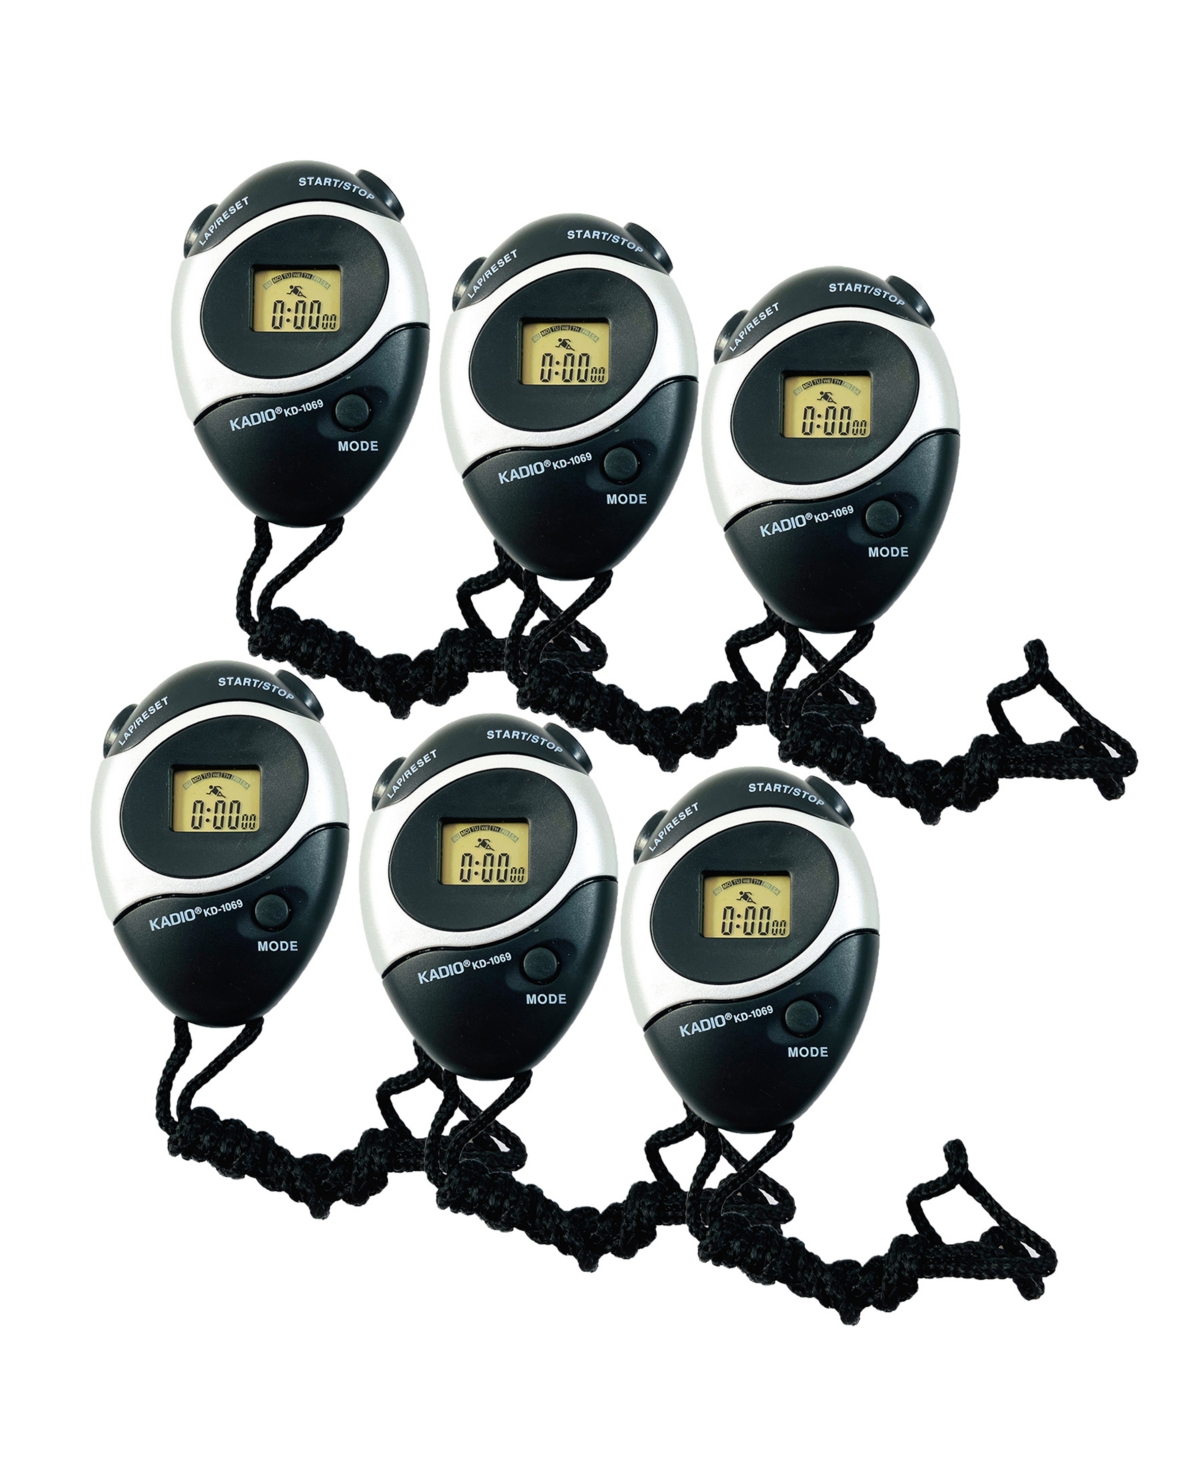 Supertek Kids' Digital Stopwatch, Set Of 6 In Black